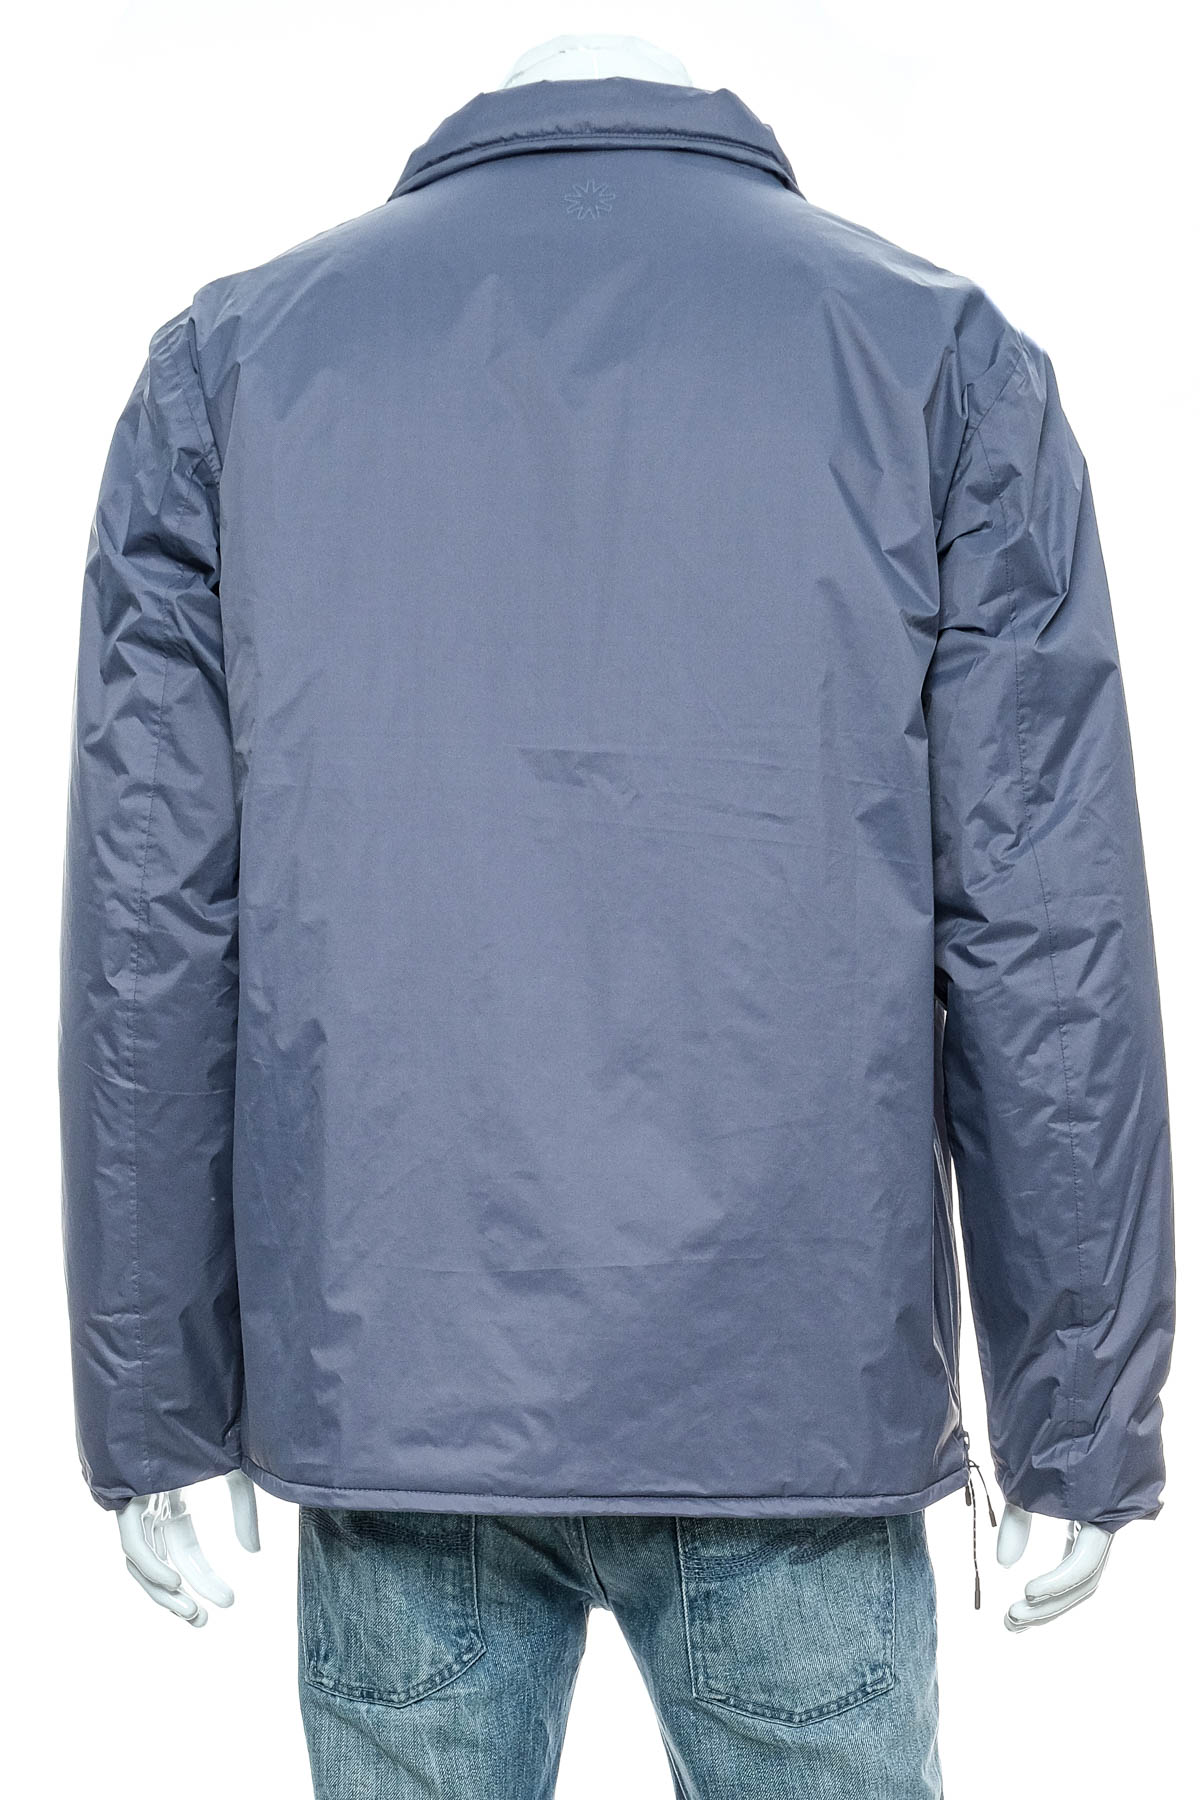 Men's jacket - RAINS - 1